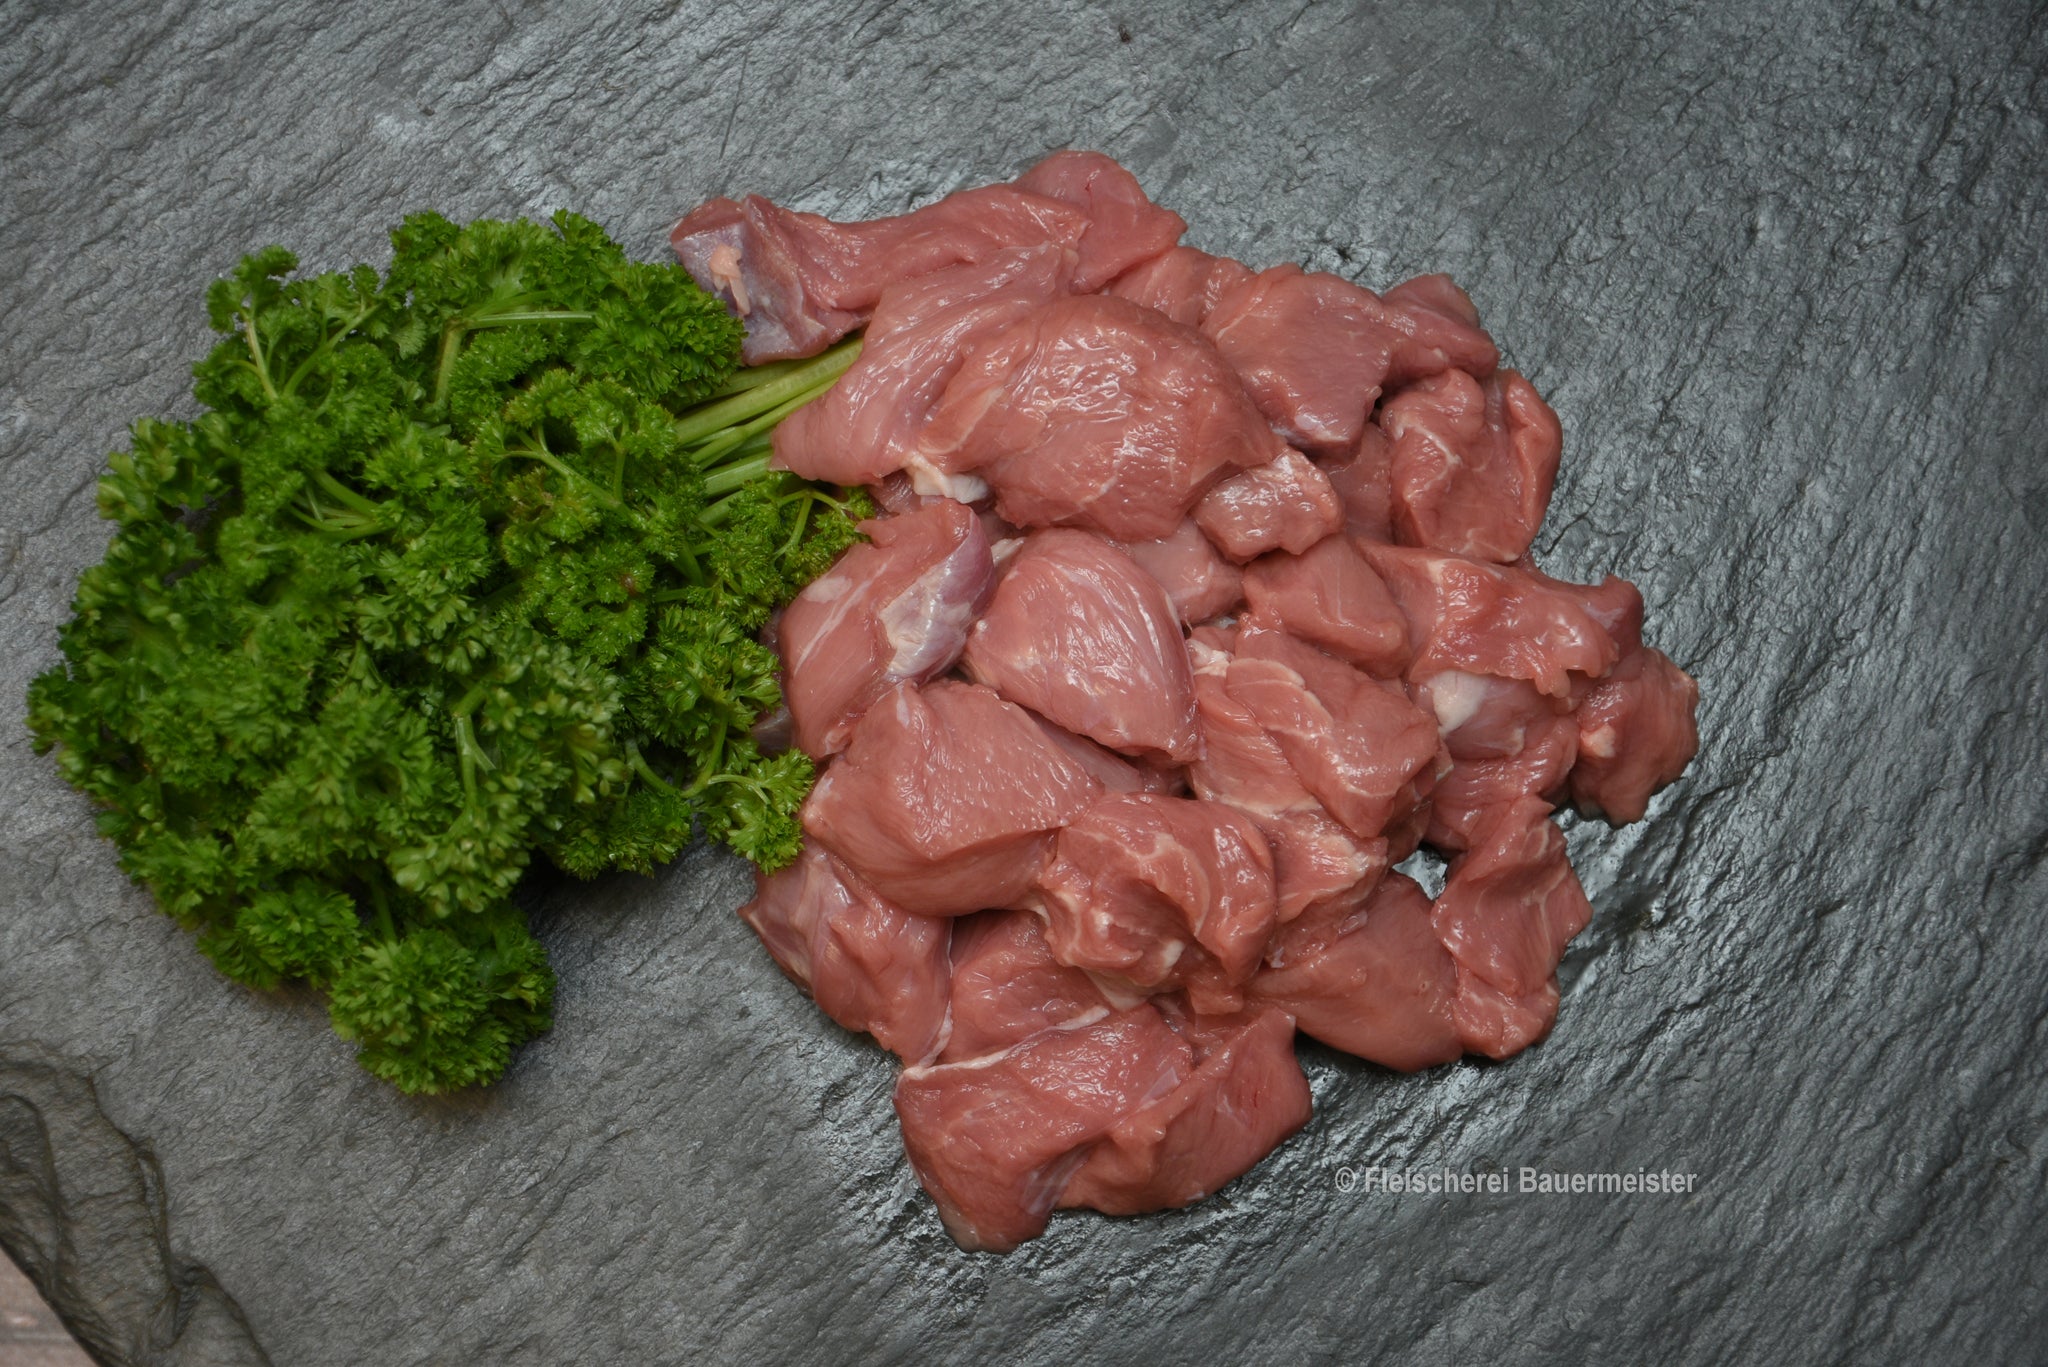 Kalbsgulasch, 250g Portion, Preis pro kg 28,90€ - Anzahlung